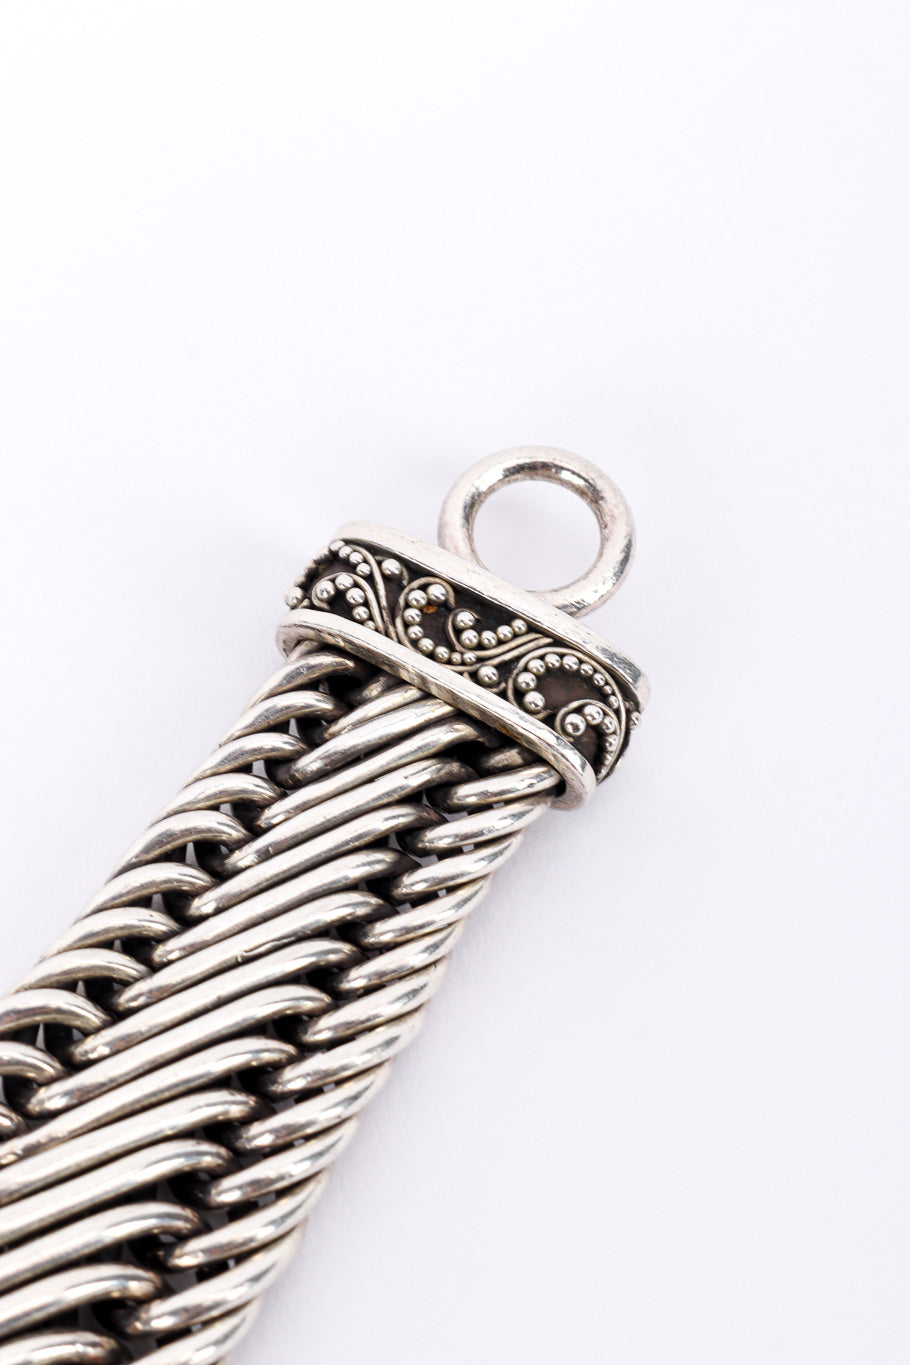 Vintage Woven Link Bracelet ring closure closeup @recessla